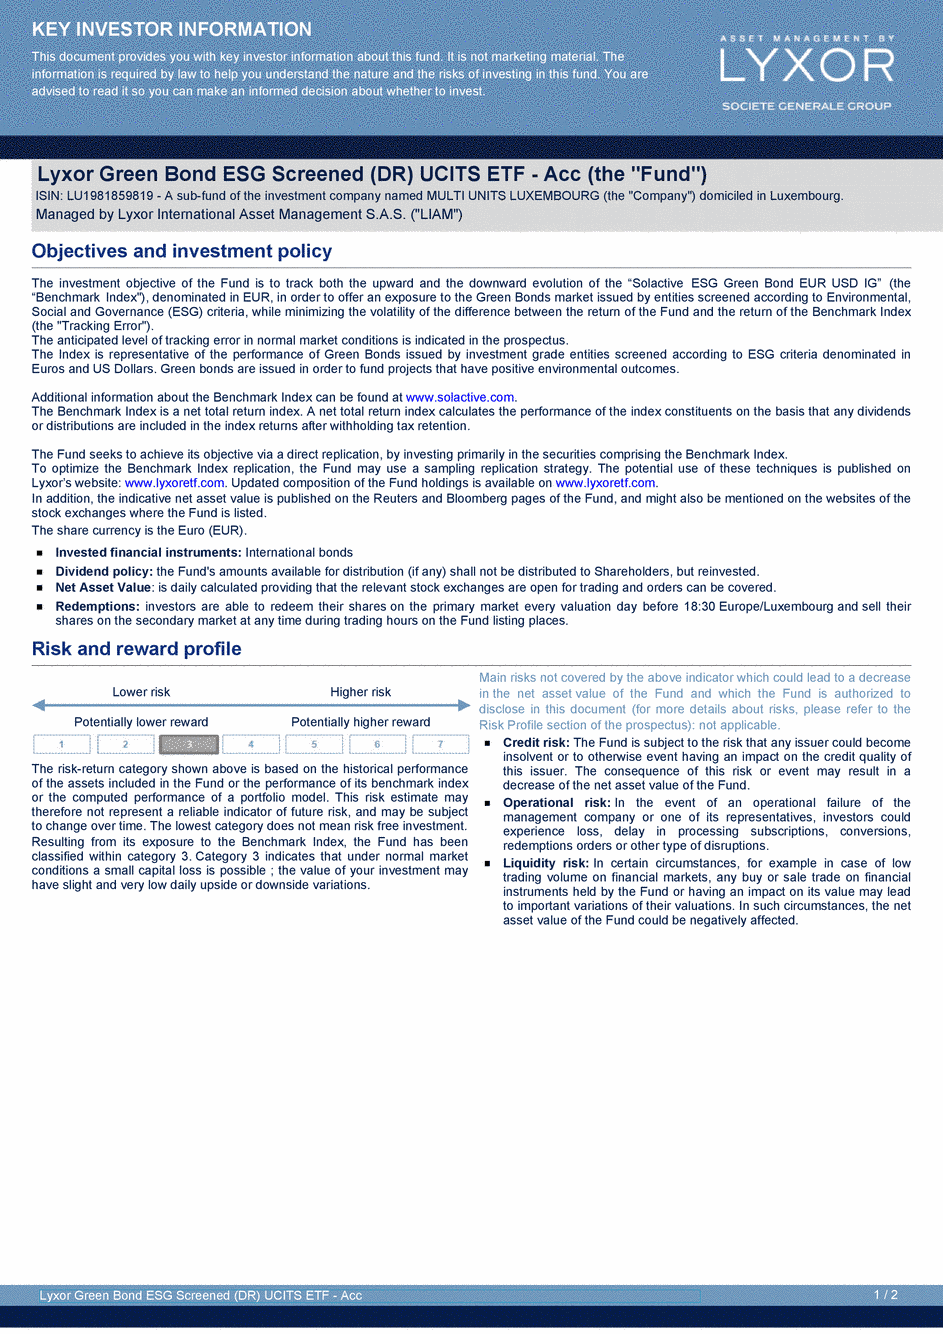 DICI Lyxor Green Bond ESG Screened (DR) UCITS ETF - Acc - 24/06/2019 - Anglais